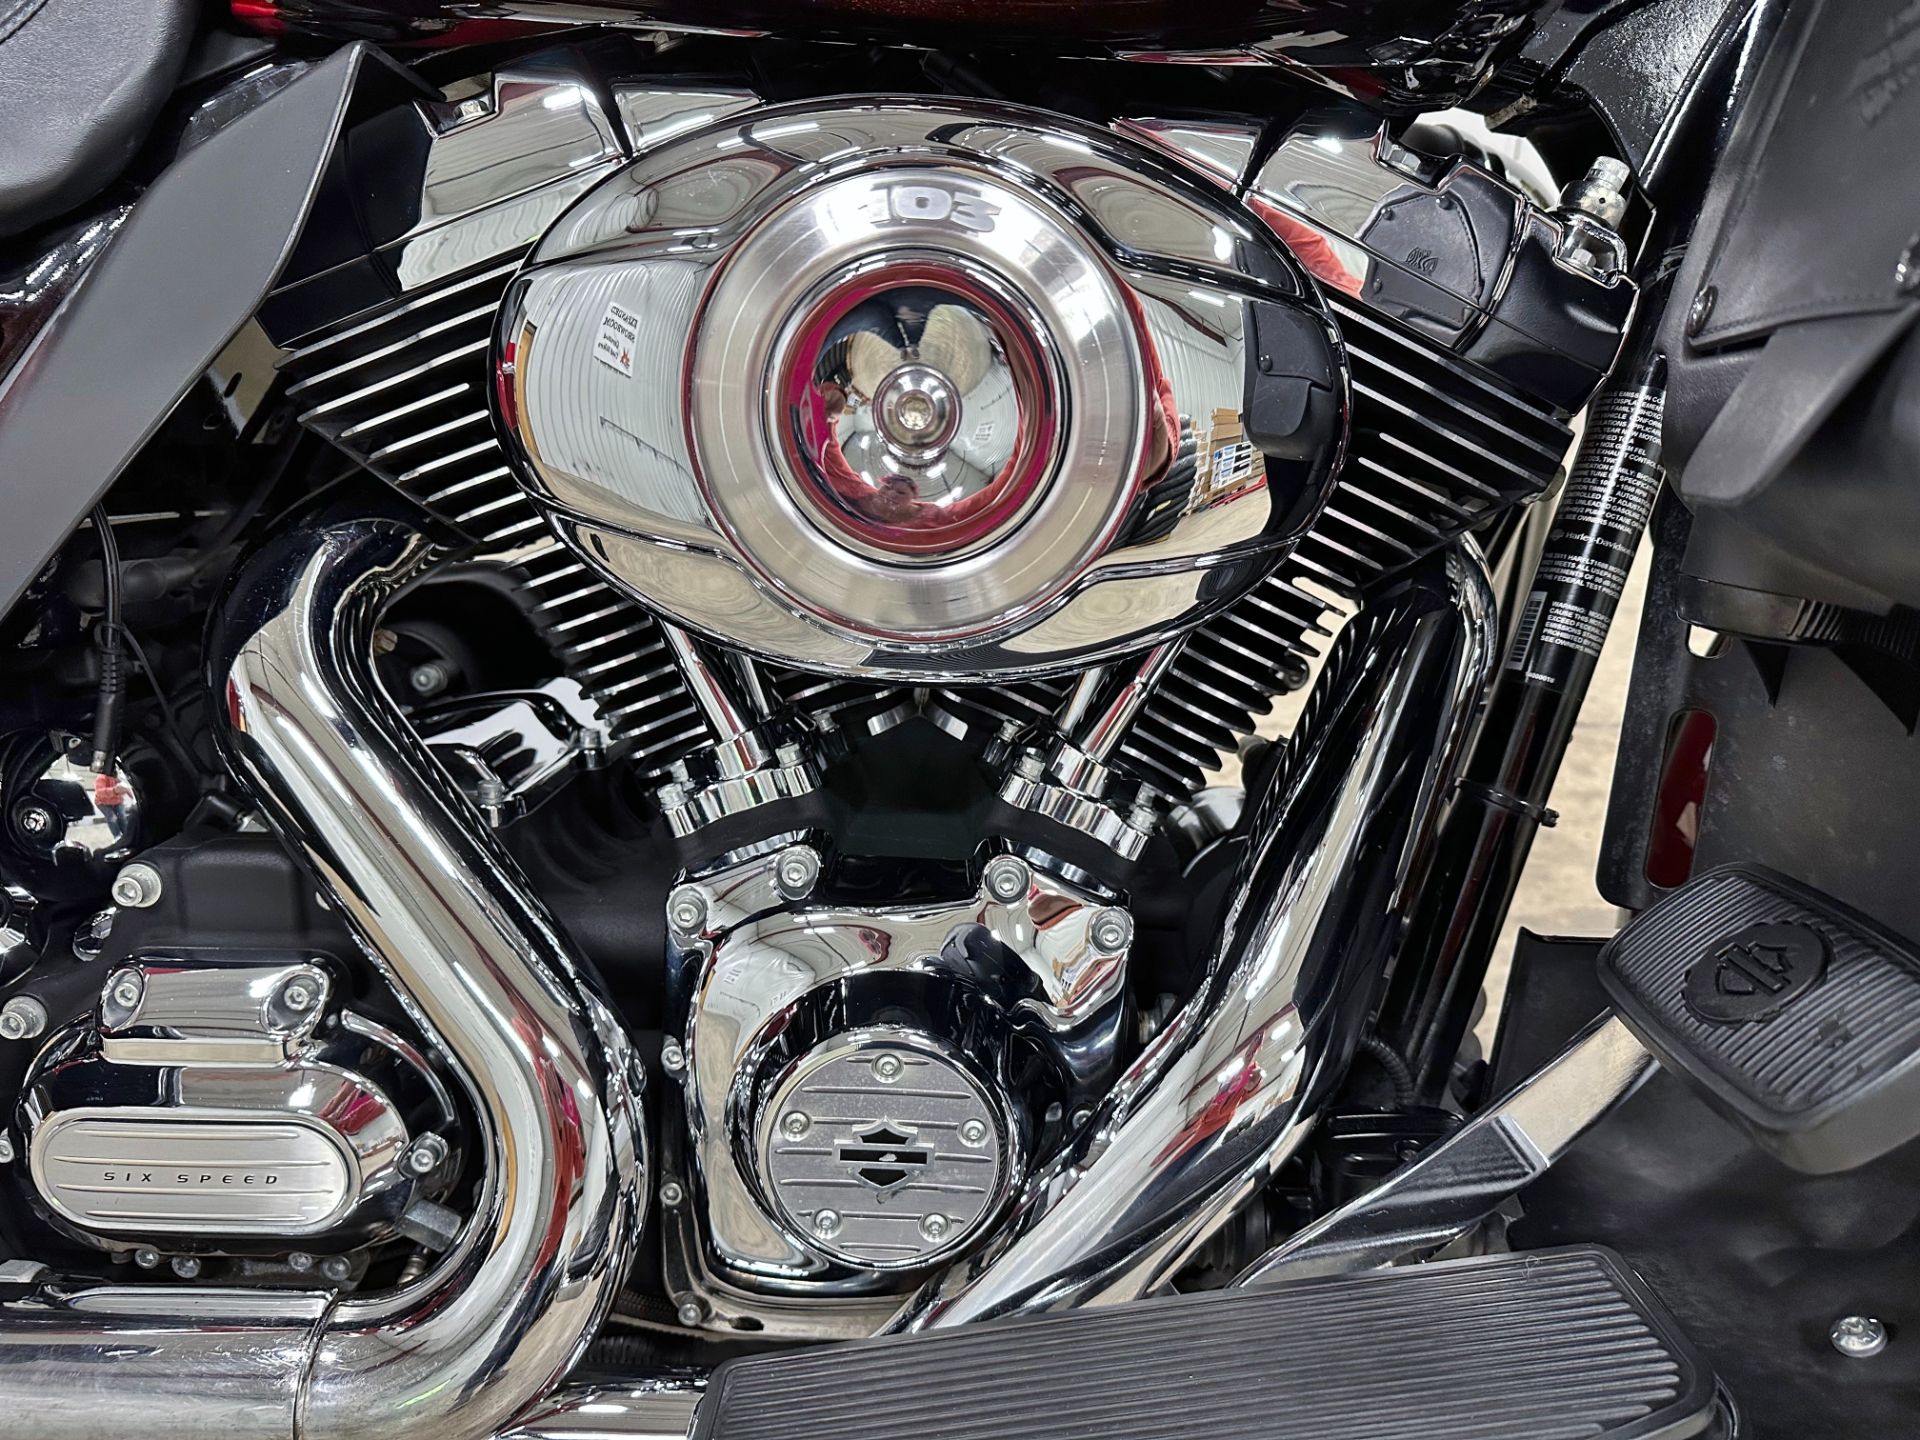 2011 Harley-Davidson Electra Glide® Ultra Limited in Sandusky, Ohio - Photo 2